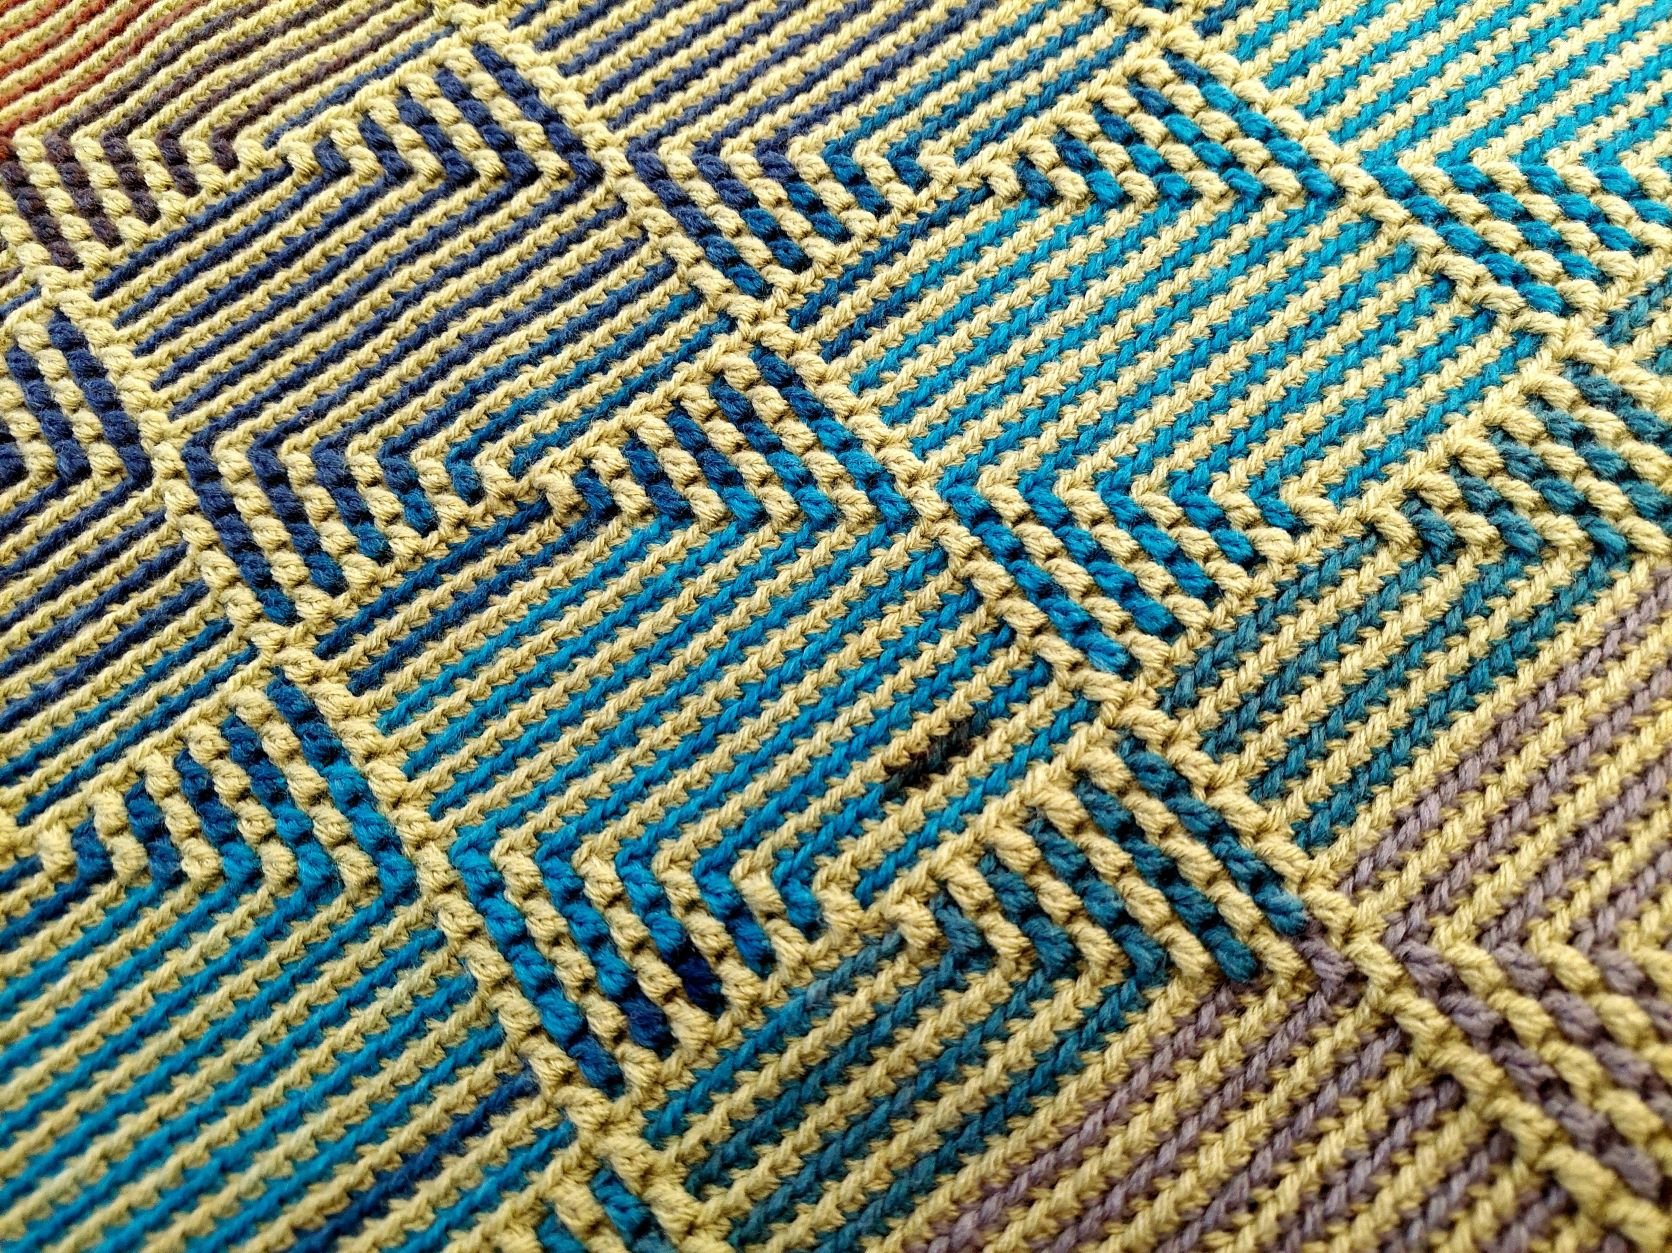 Square Away. Overlay mosaic crochet pattern